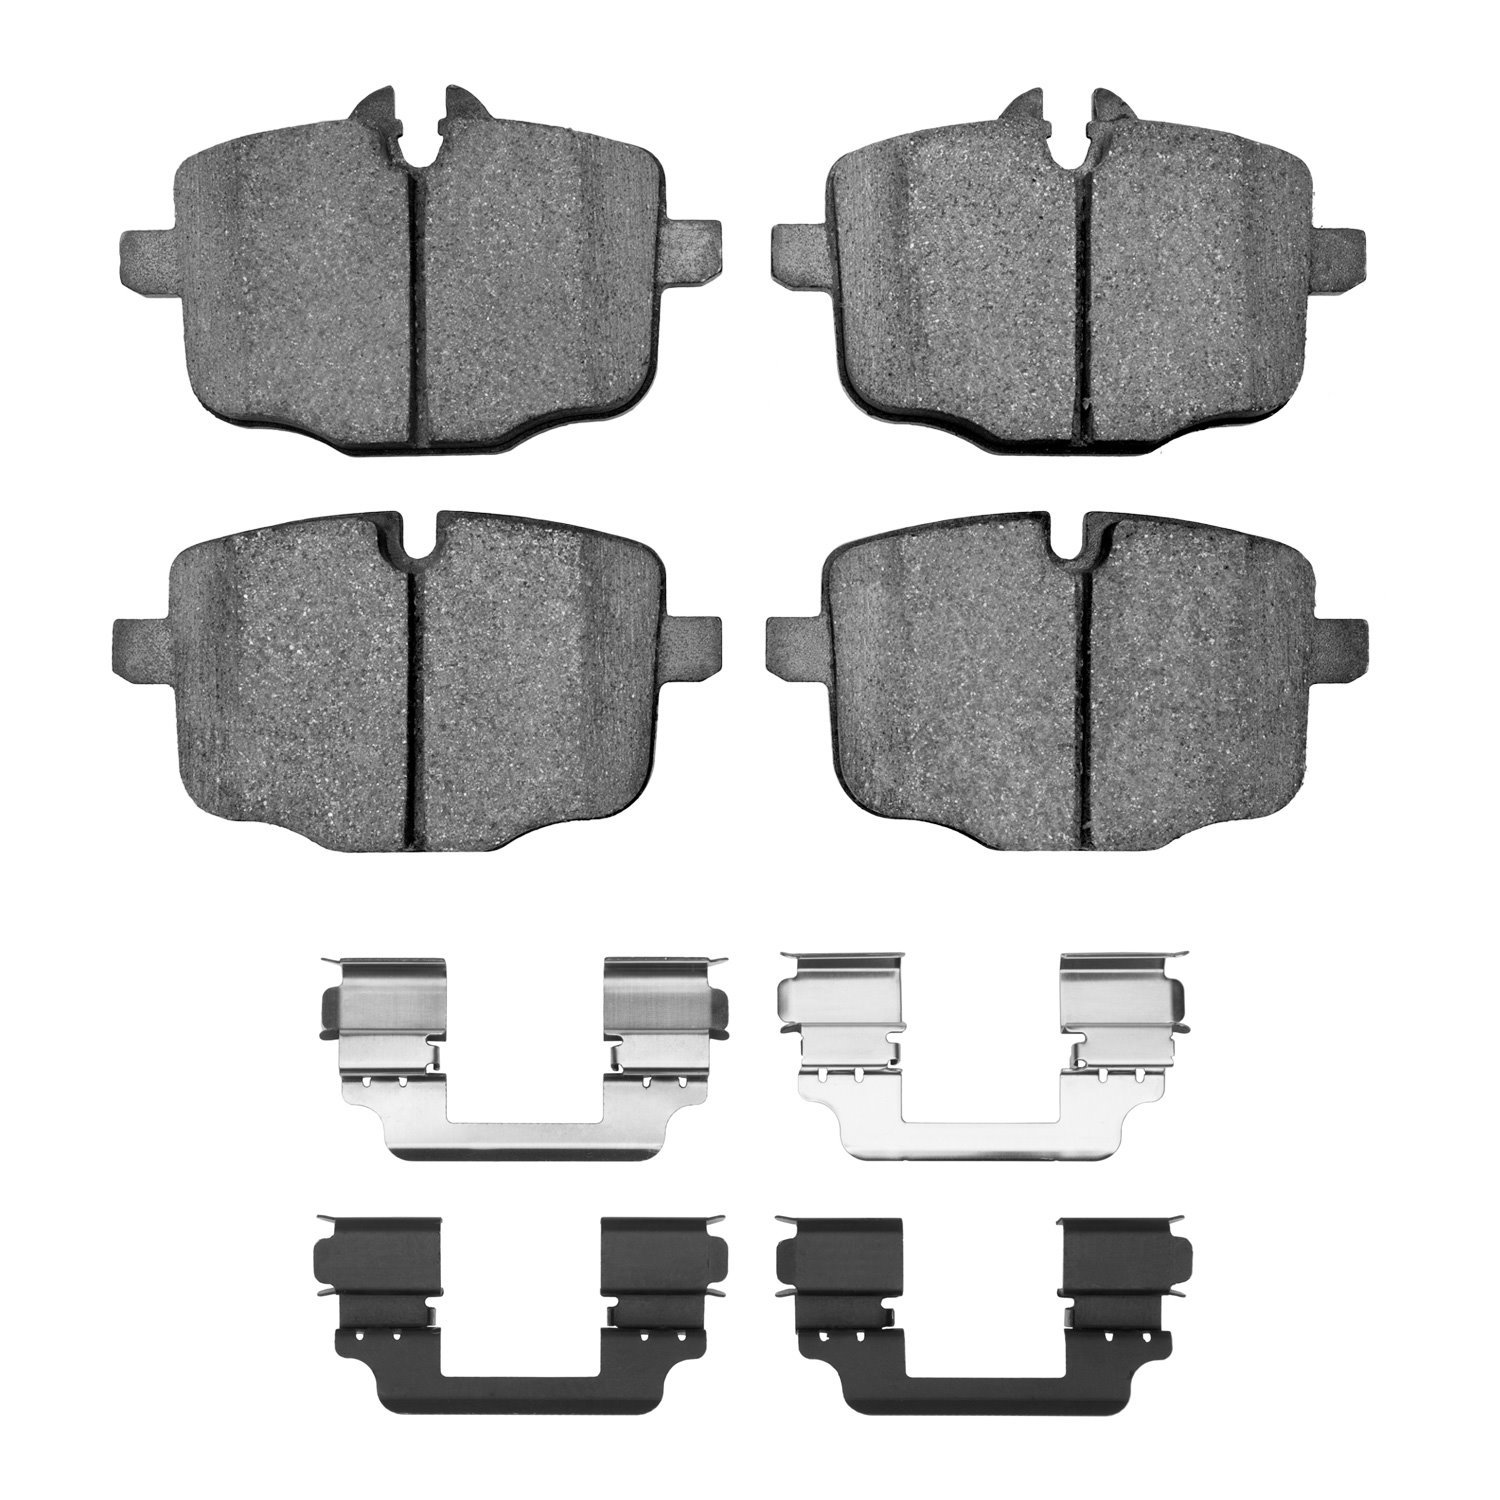 1552-1469-01 5000 Advanced Low-Metallic Brake Pads & Hardware Kit, 2012-2019 BMW, Position: Rear